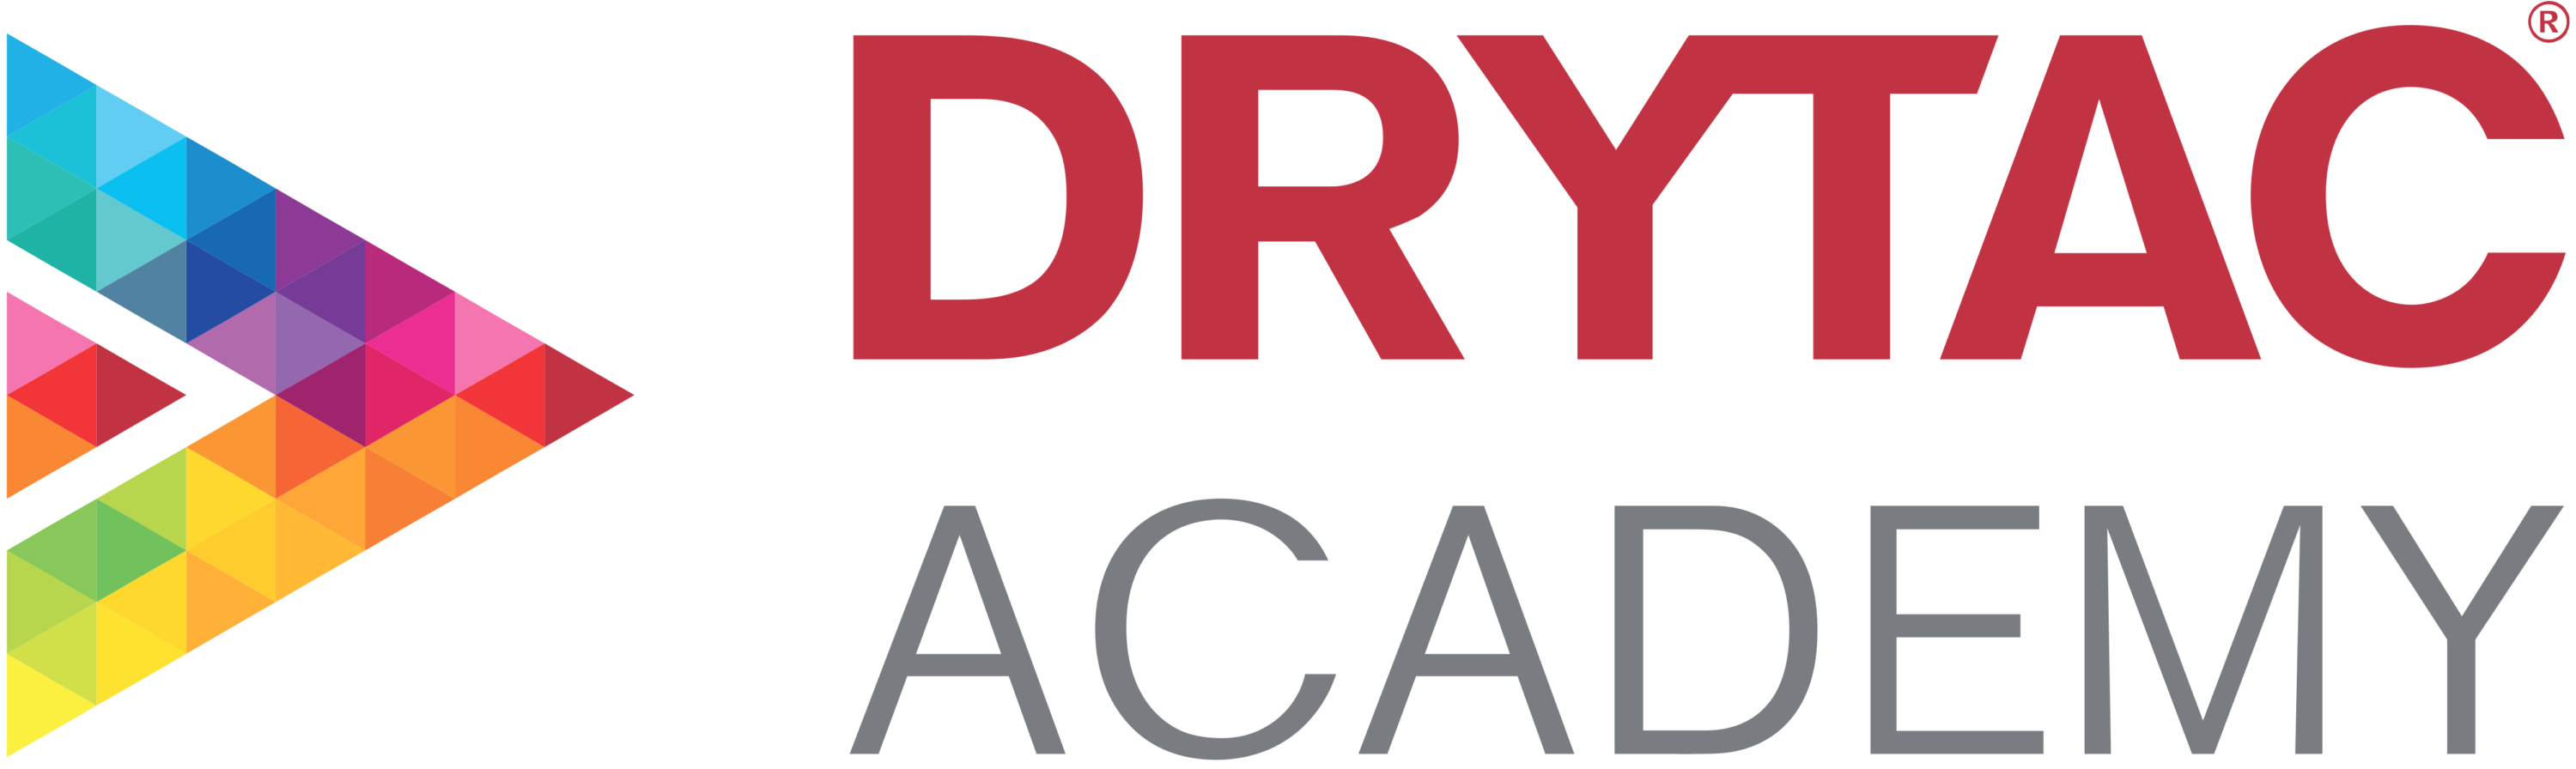 Drytac Academy Logo